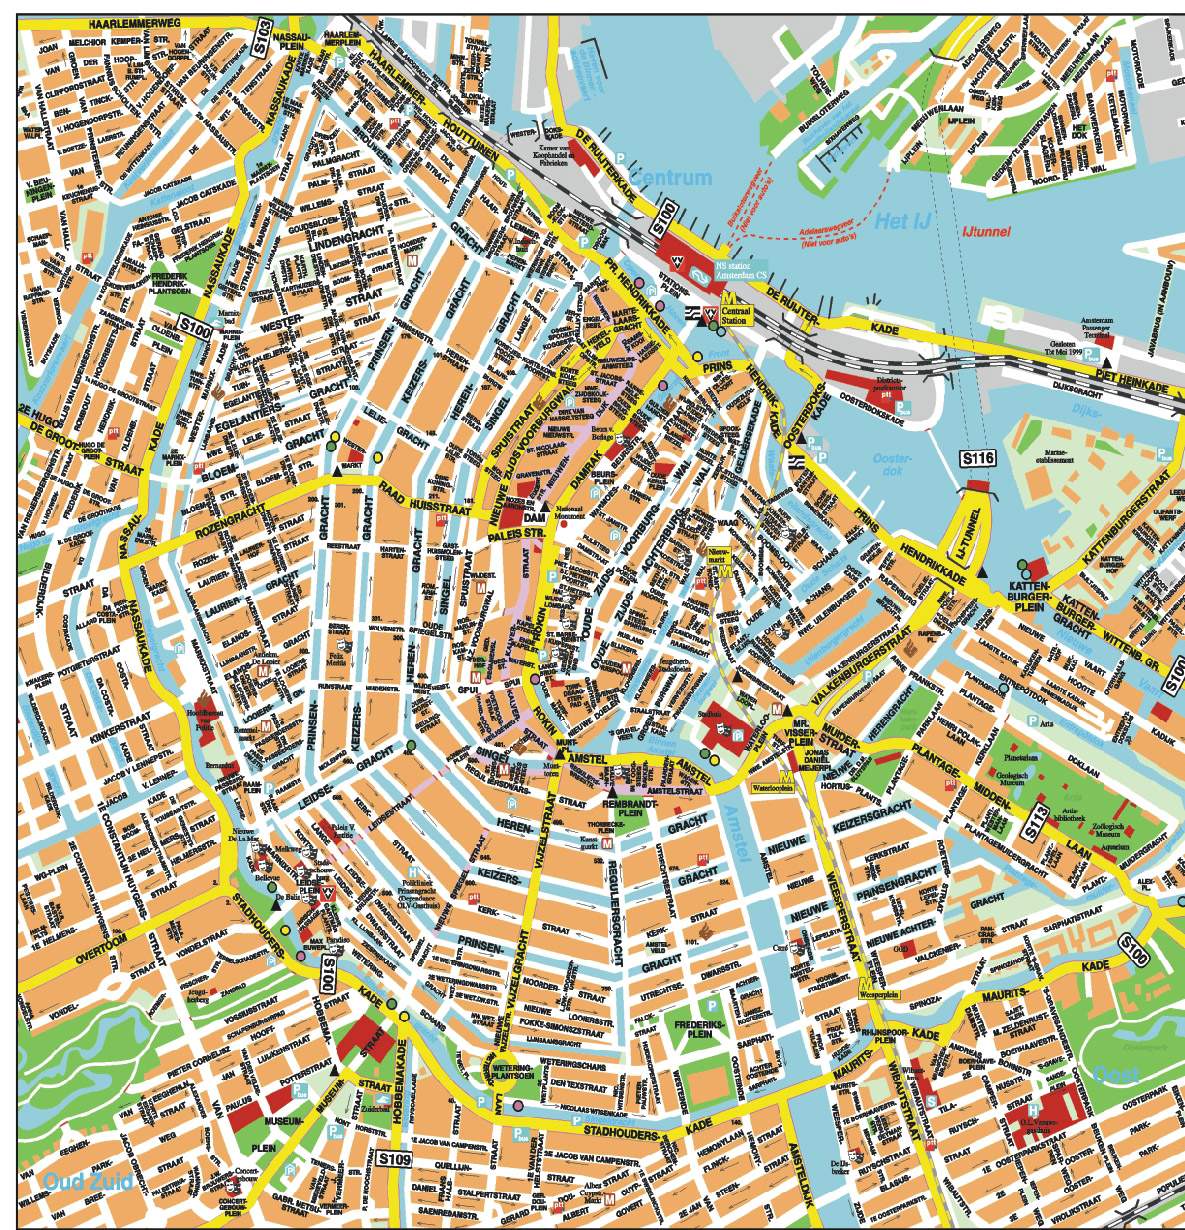 free tourist maps of amsterdam